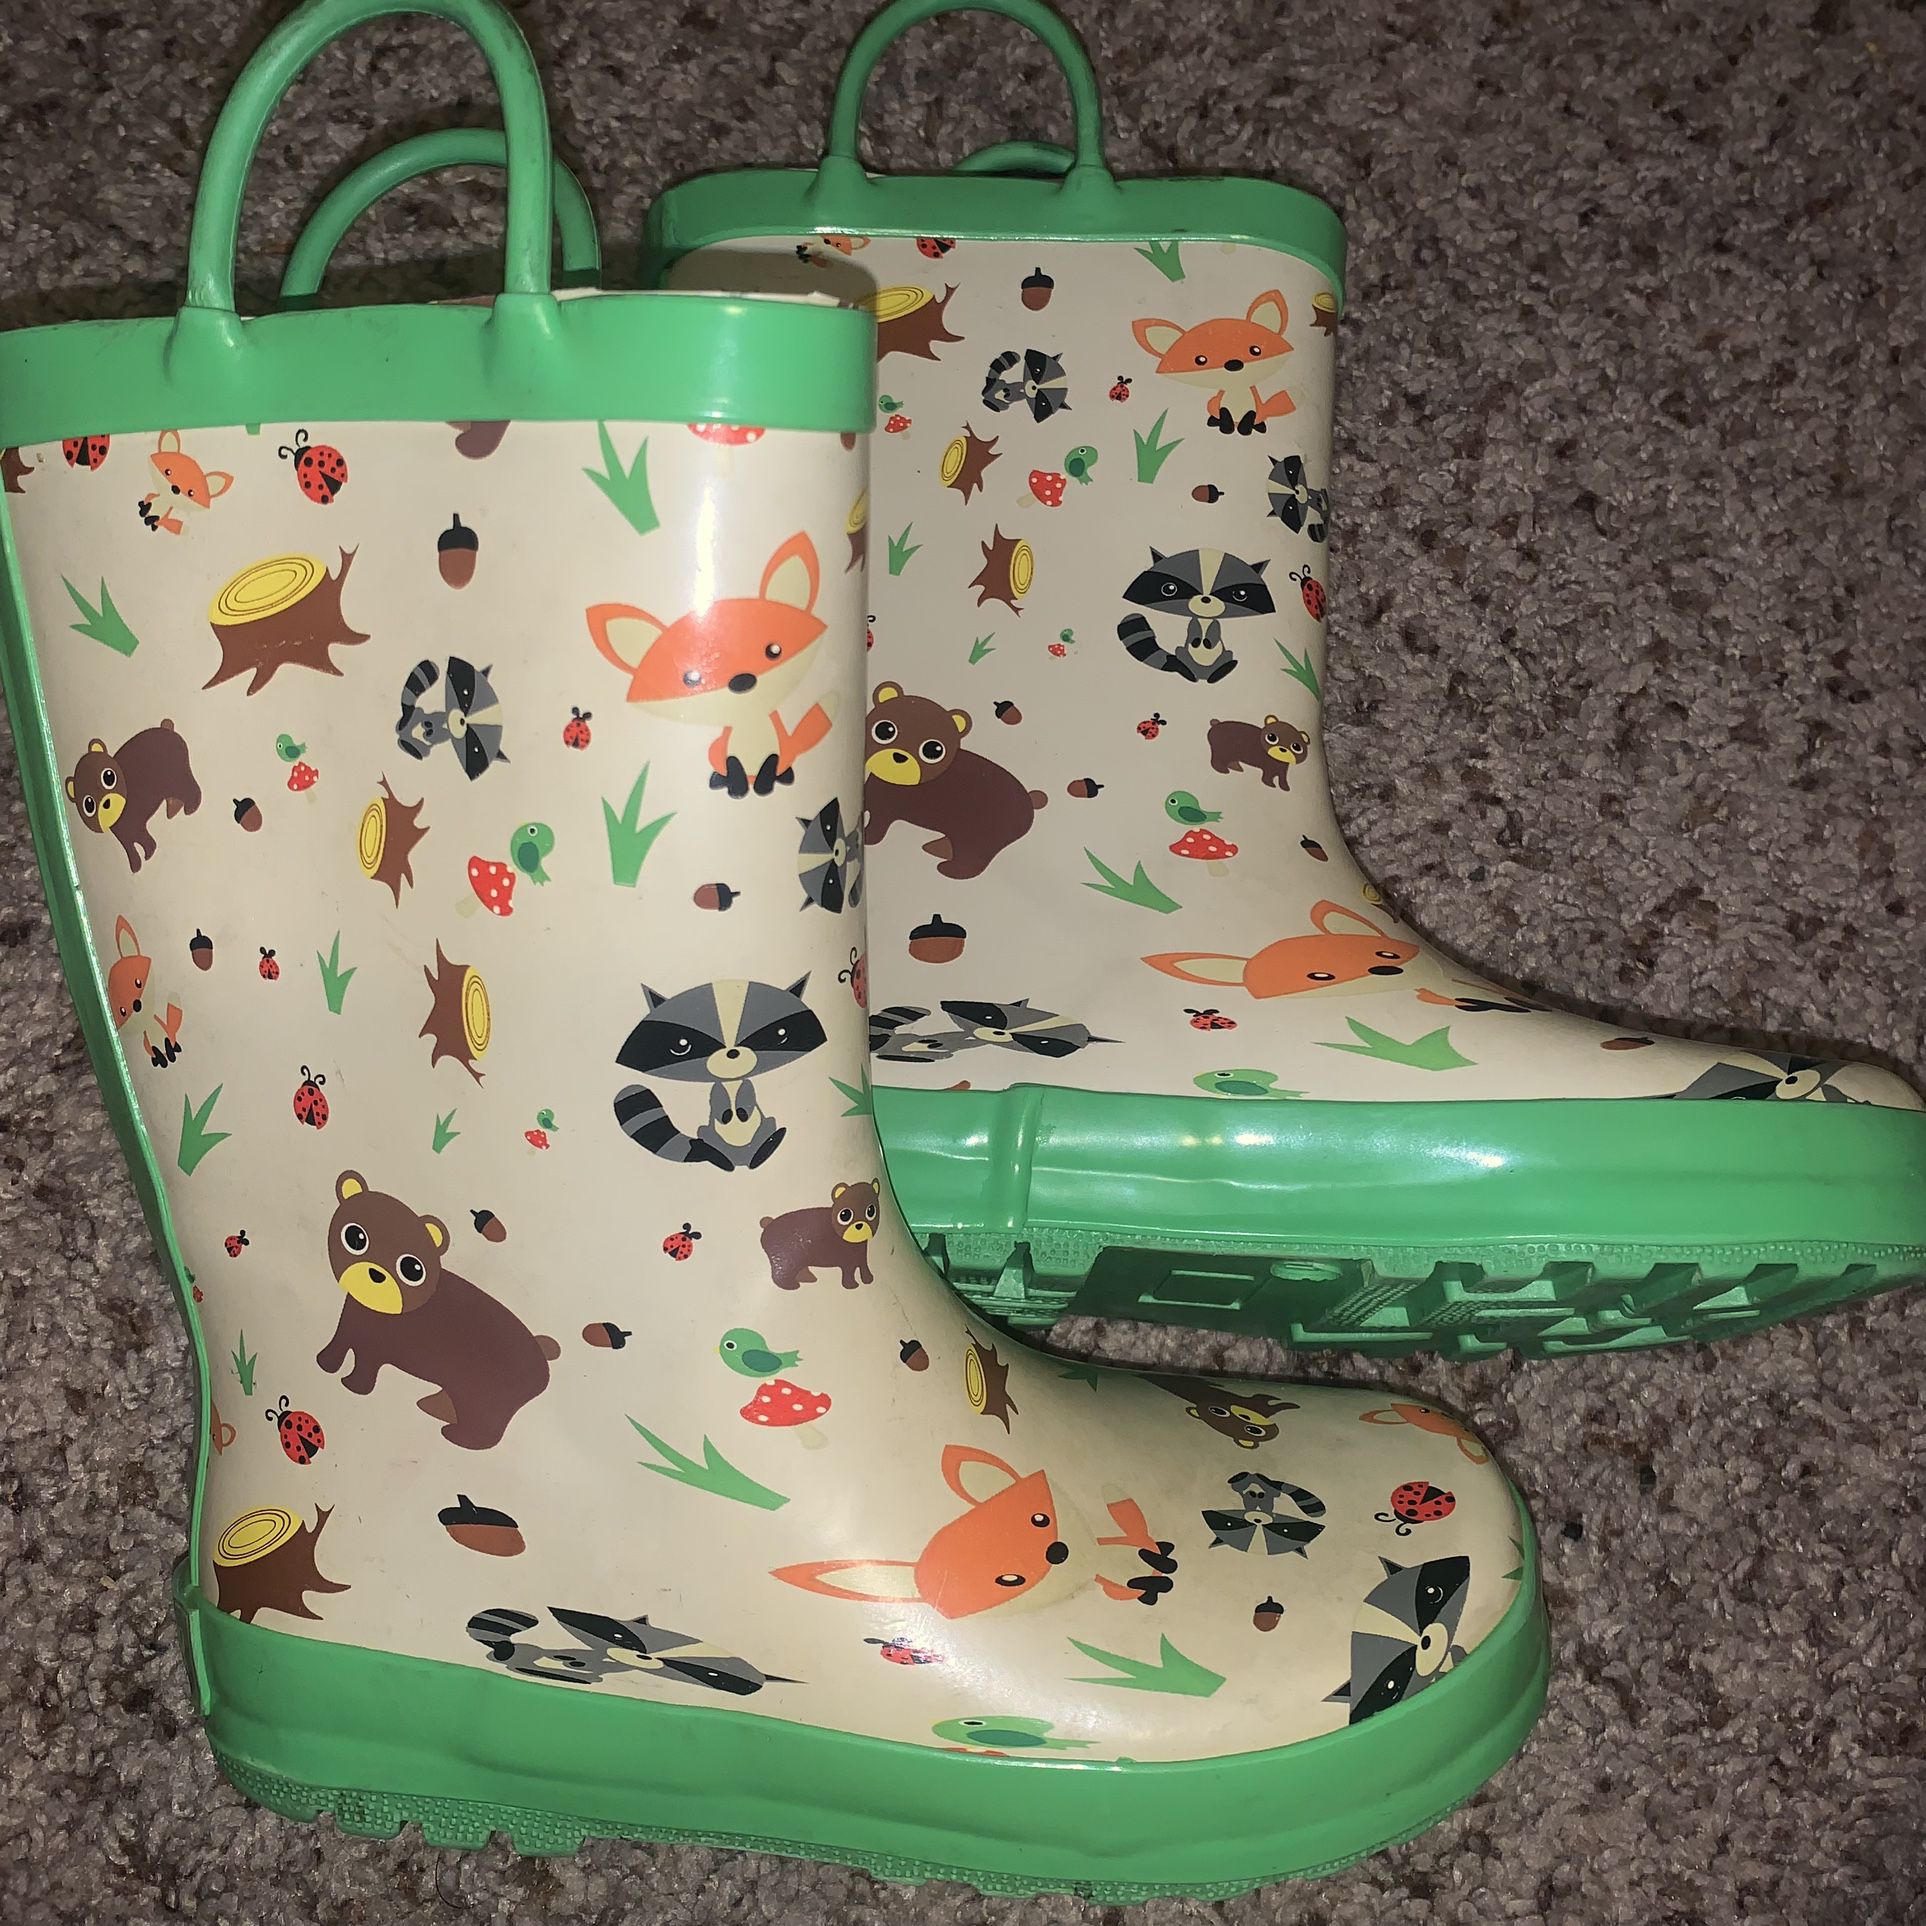 UNISEX - Size 11 - Rain Boots - BOYS/GIRLS